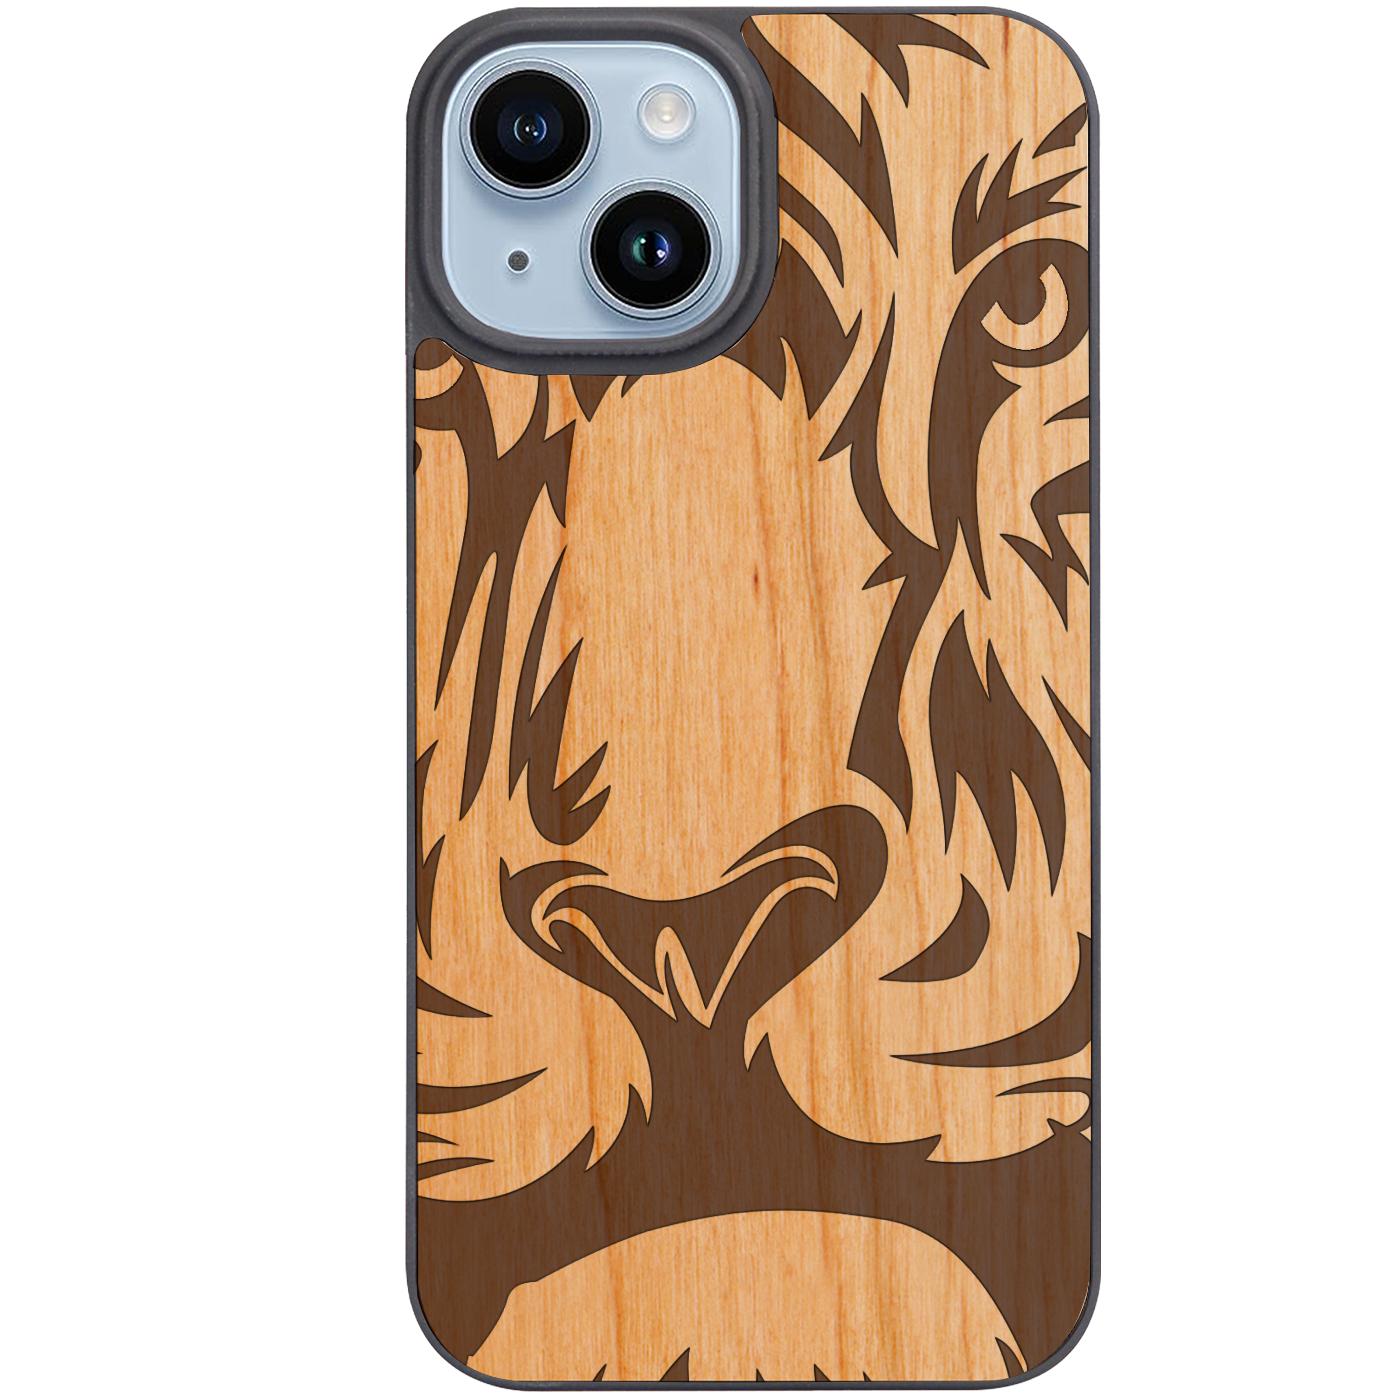 Lion Face 1 - Engraved Phone Case